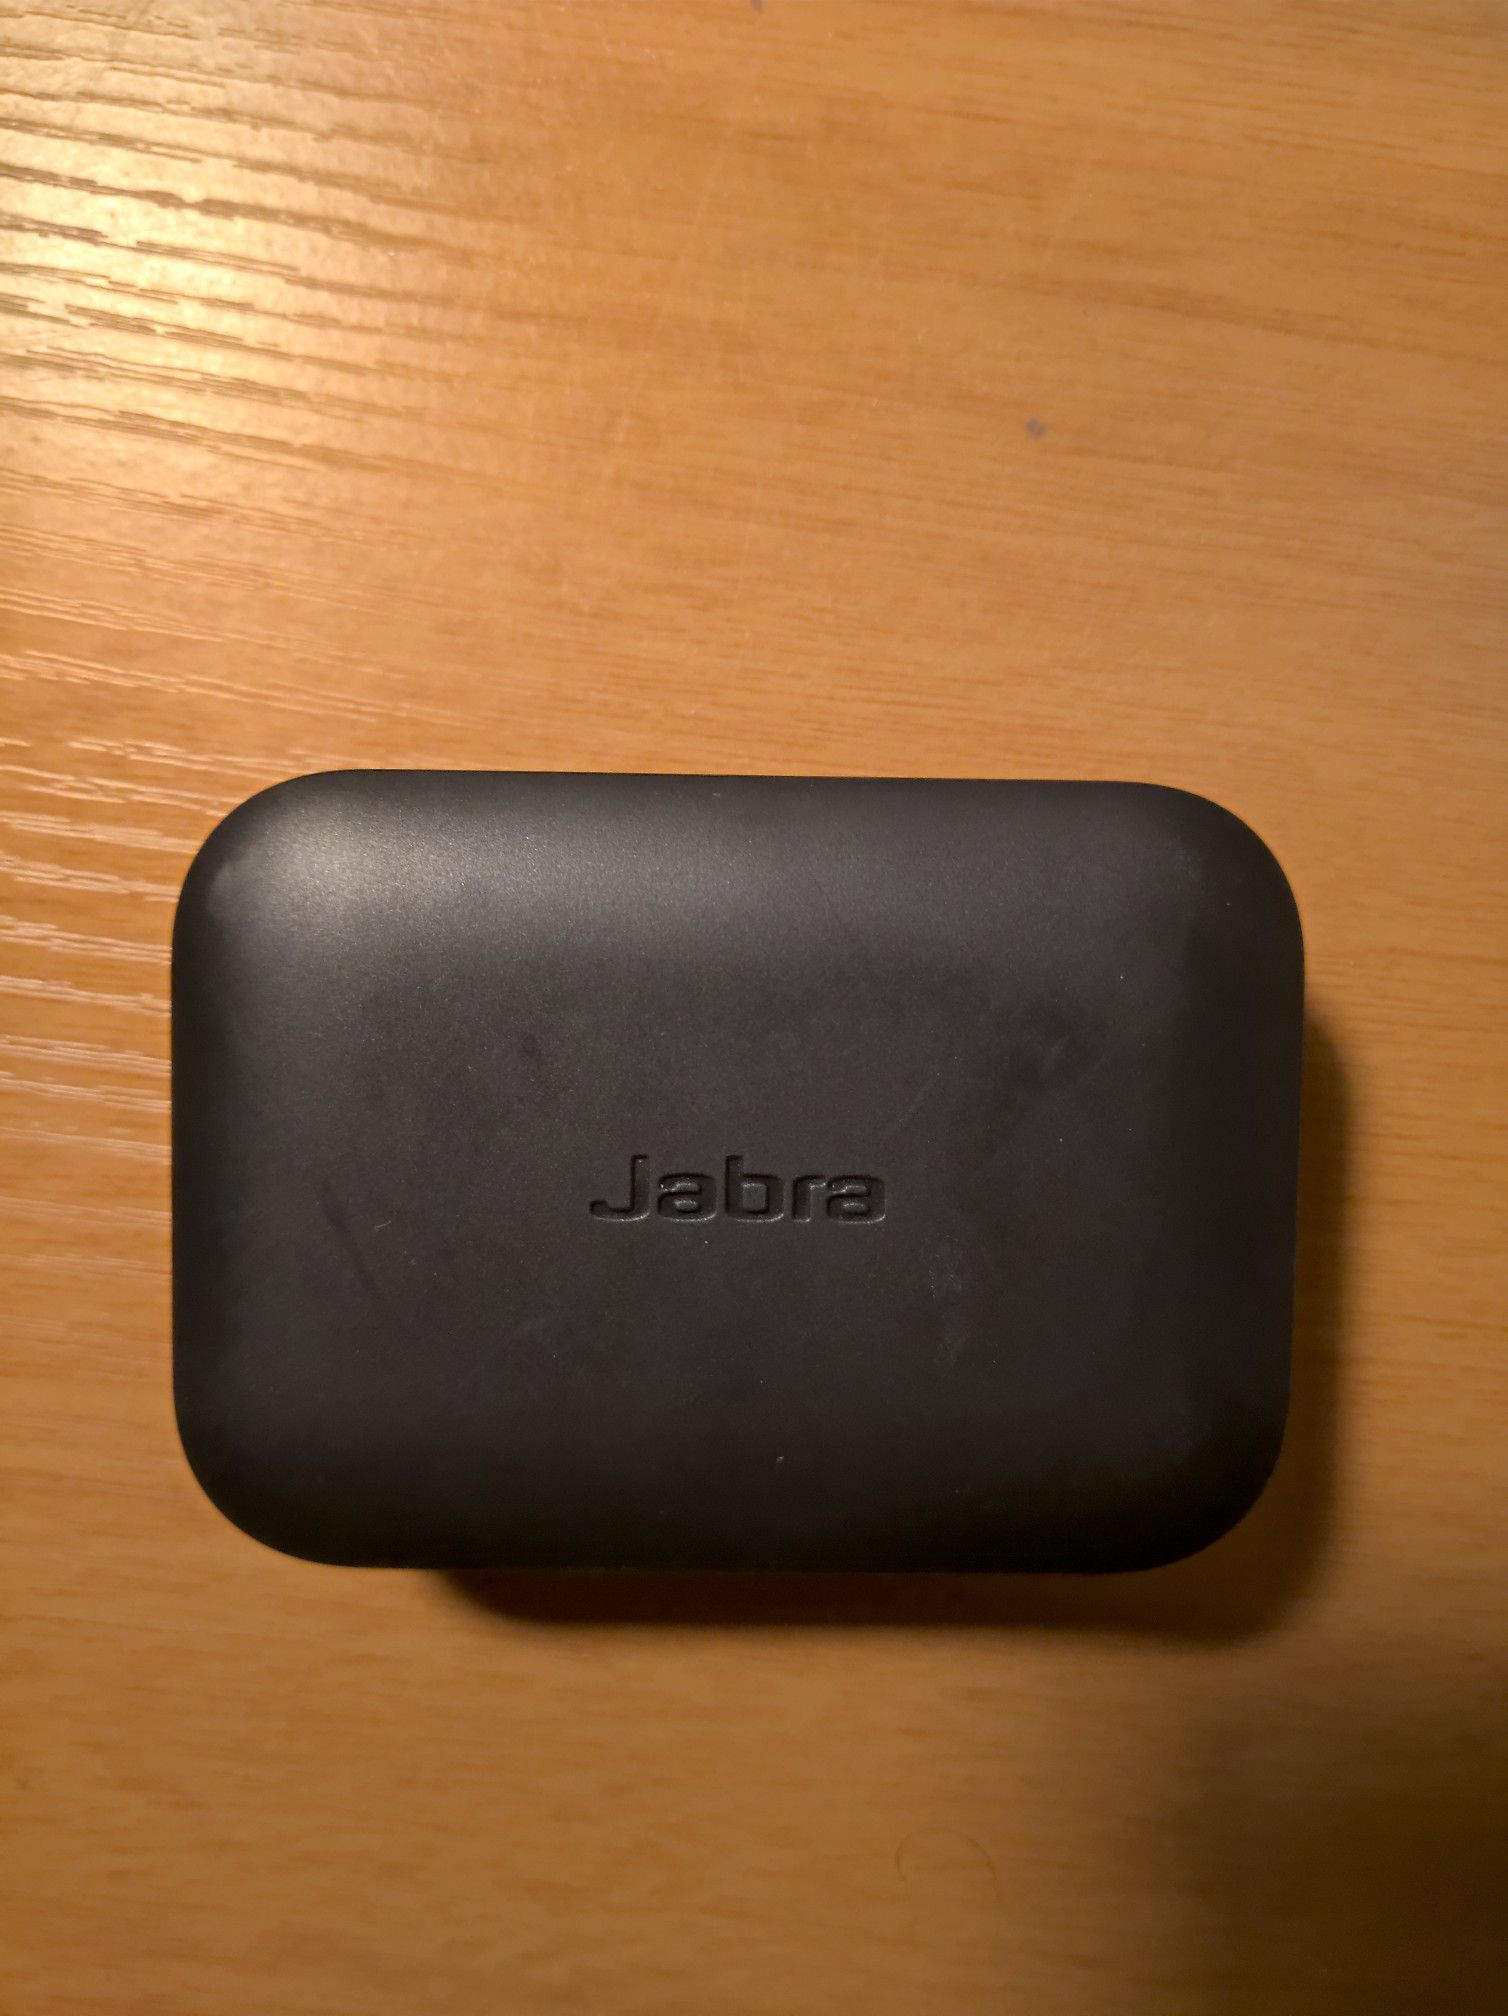 Jabra Elite sport charging box